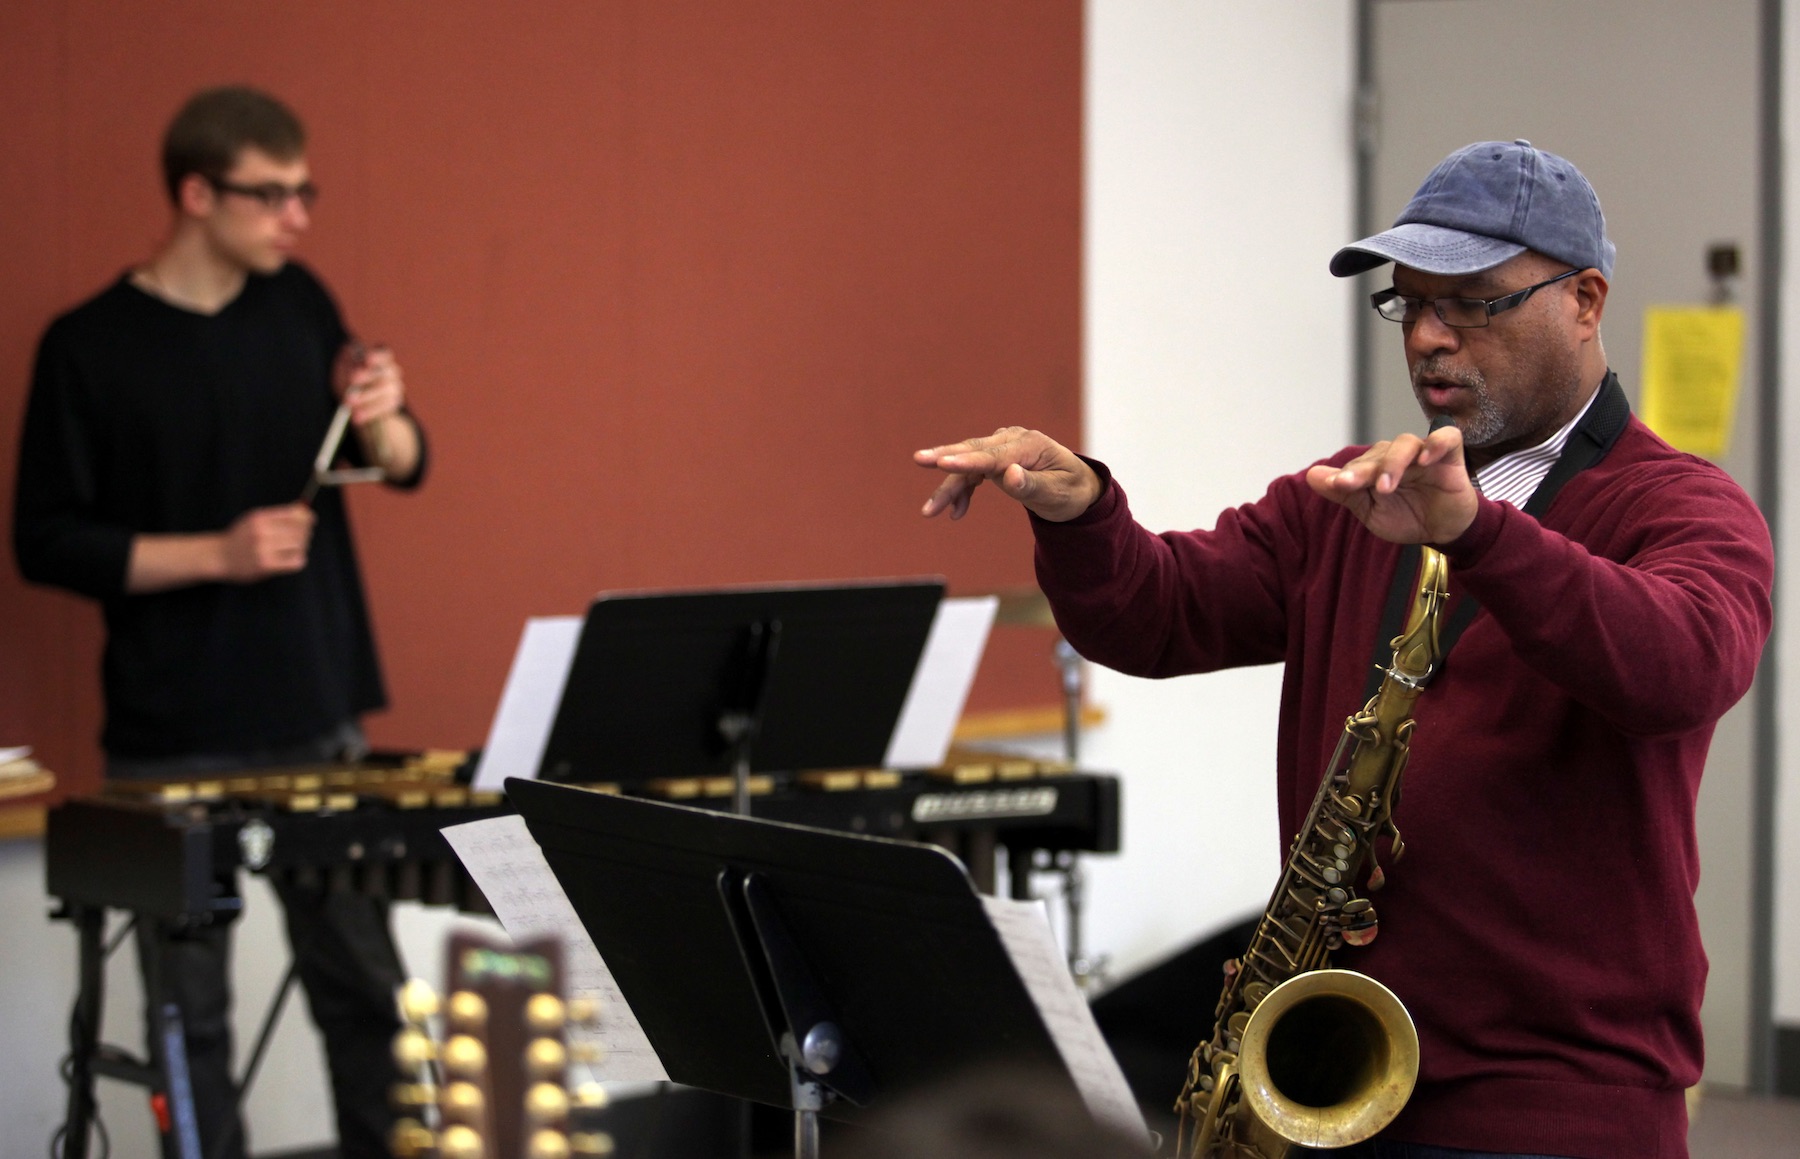 José Encarnación, assistant professor of music and director of jazz studies, works with students 